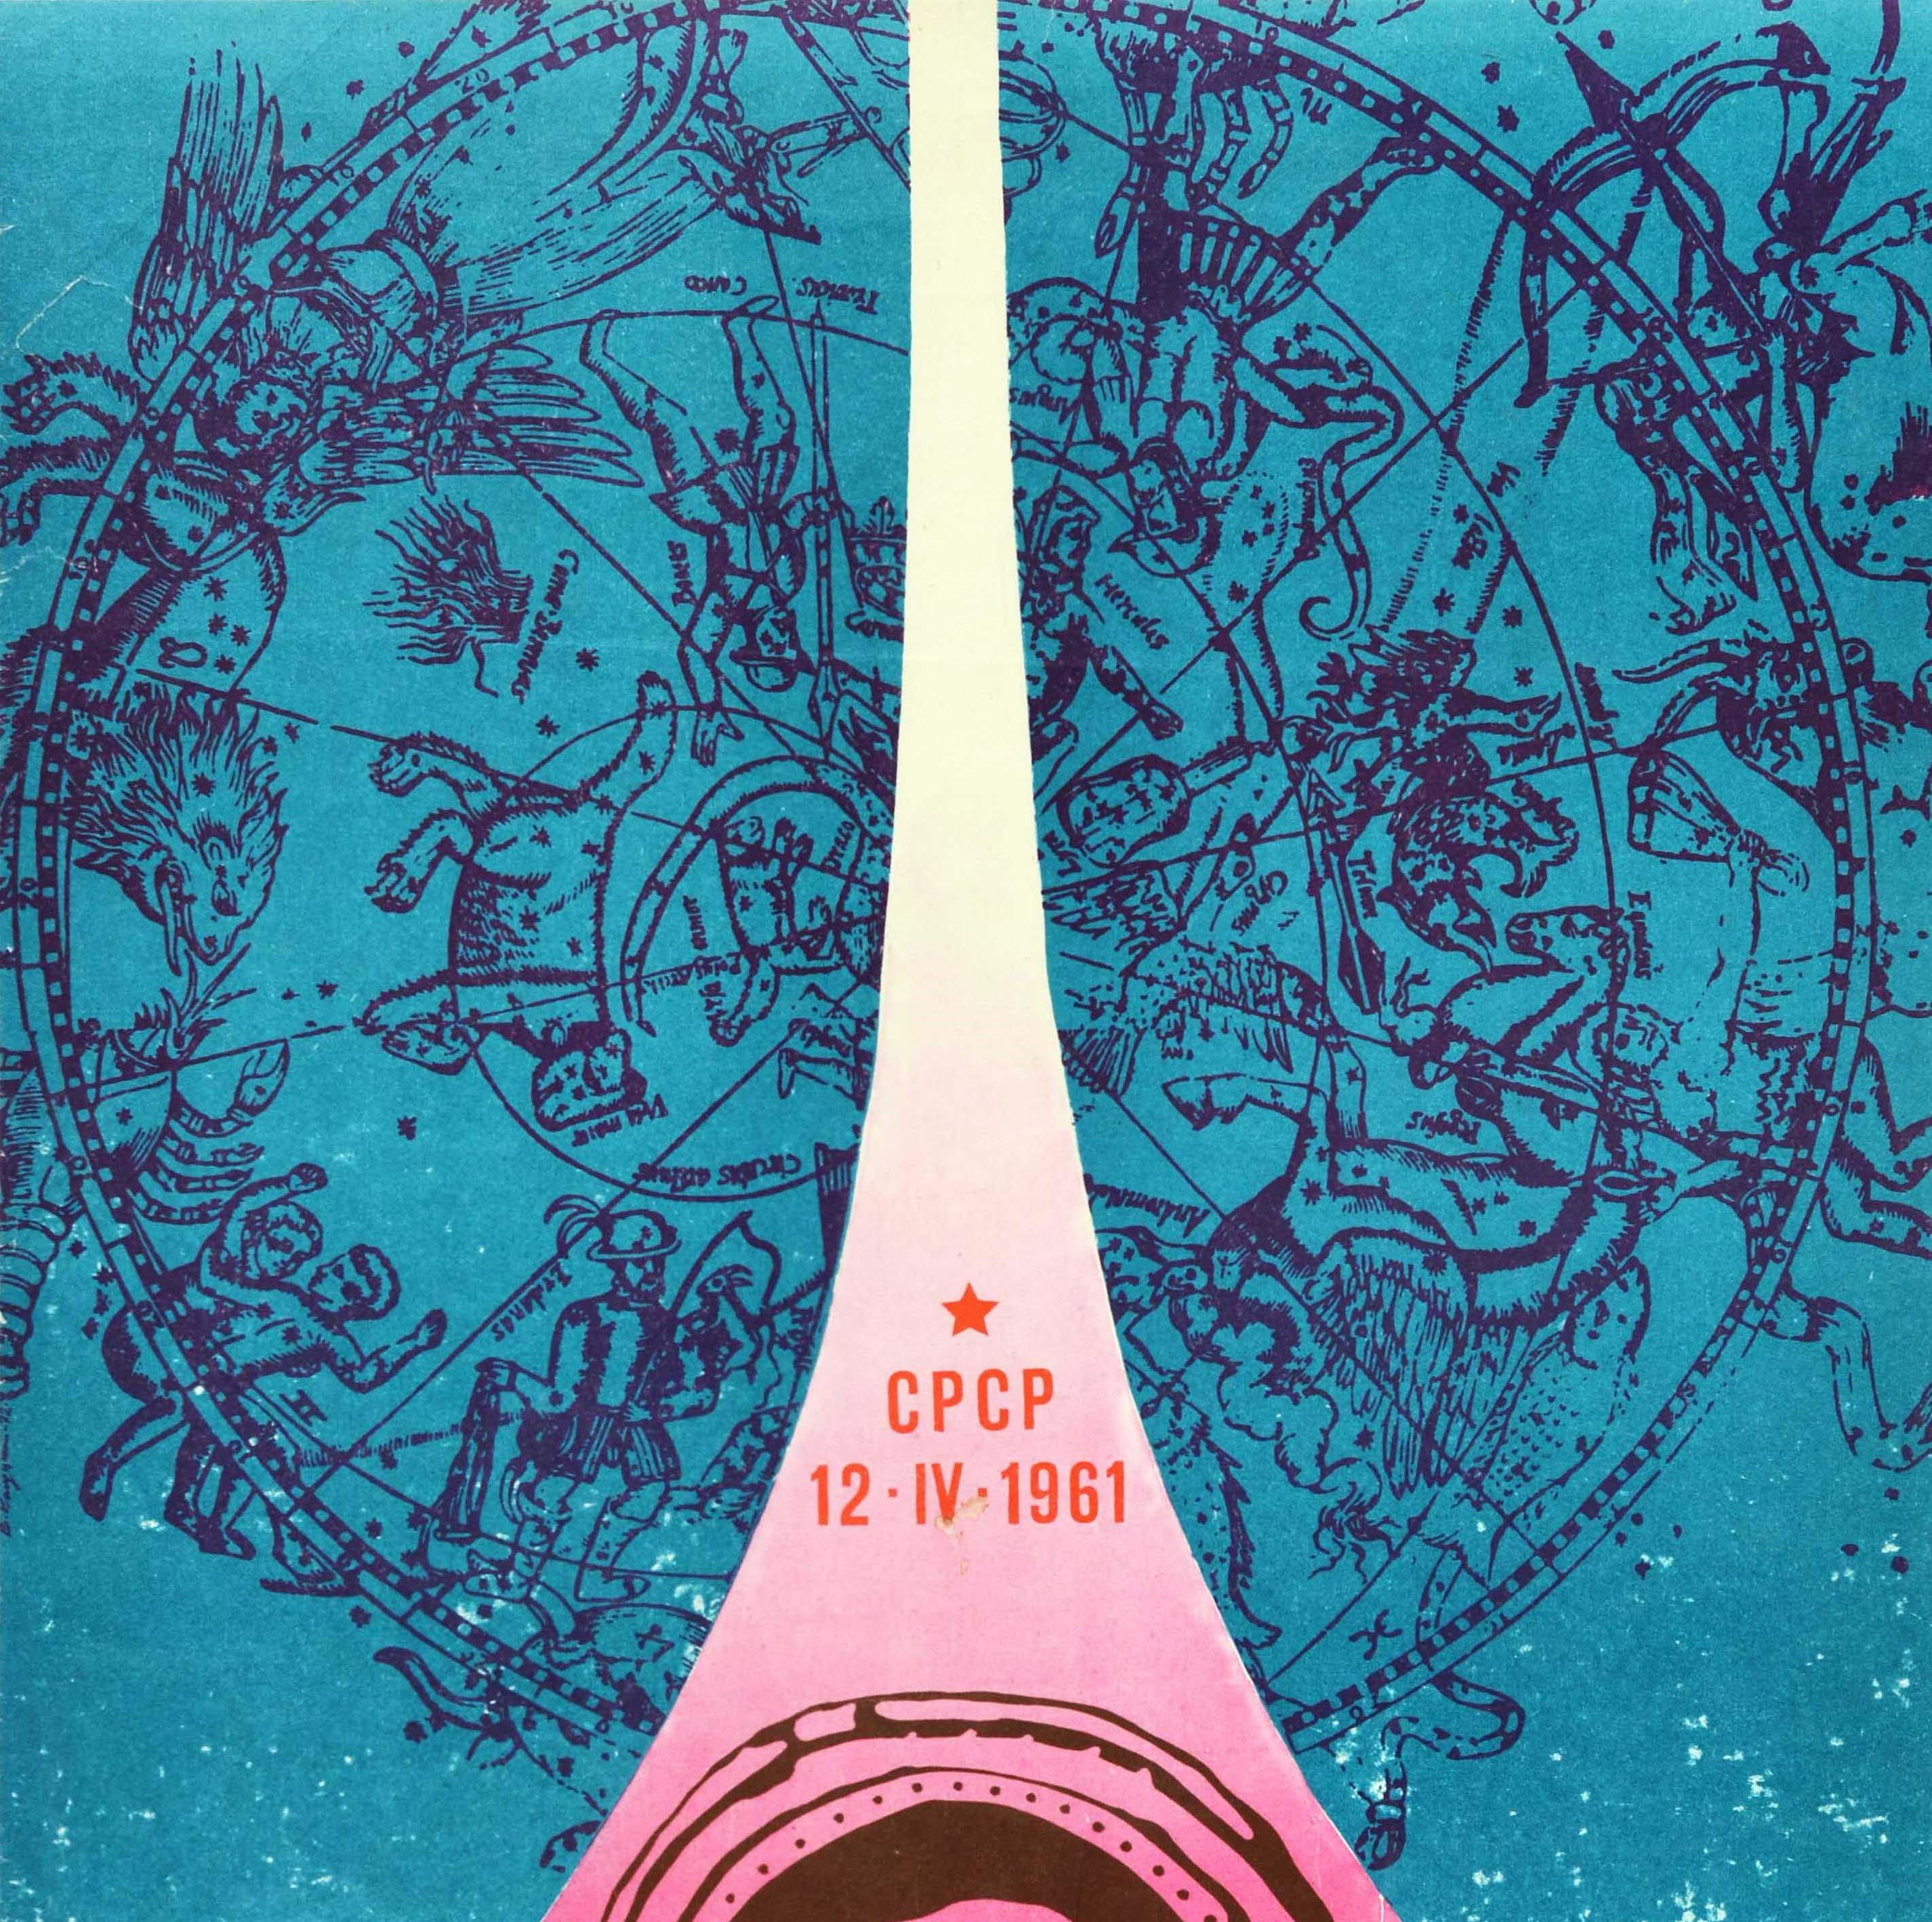 Original vintage Soviet space propaganda poster celebrating Cosmonautics Day USSR / День Космонавтики СССР featuring a dynamic design depicting a smiling Yuri Gagarin (Yuri Alekseyevich Gagarin; 1934-1968), the Soviet pilot and cosmonaut who was the